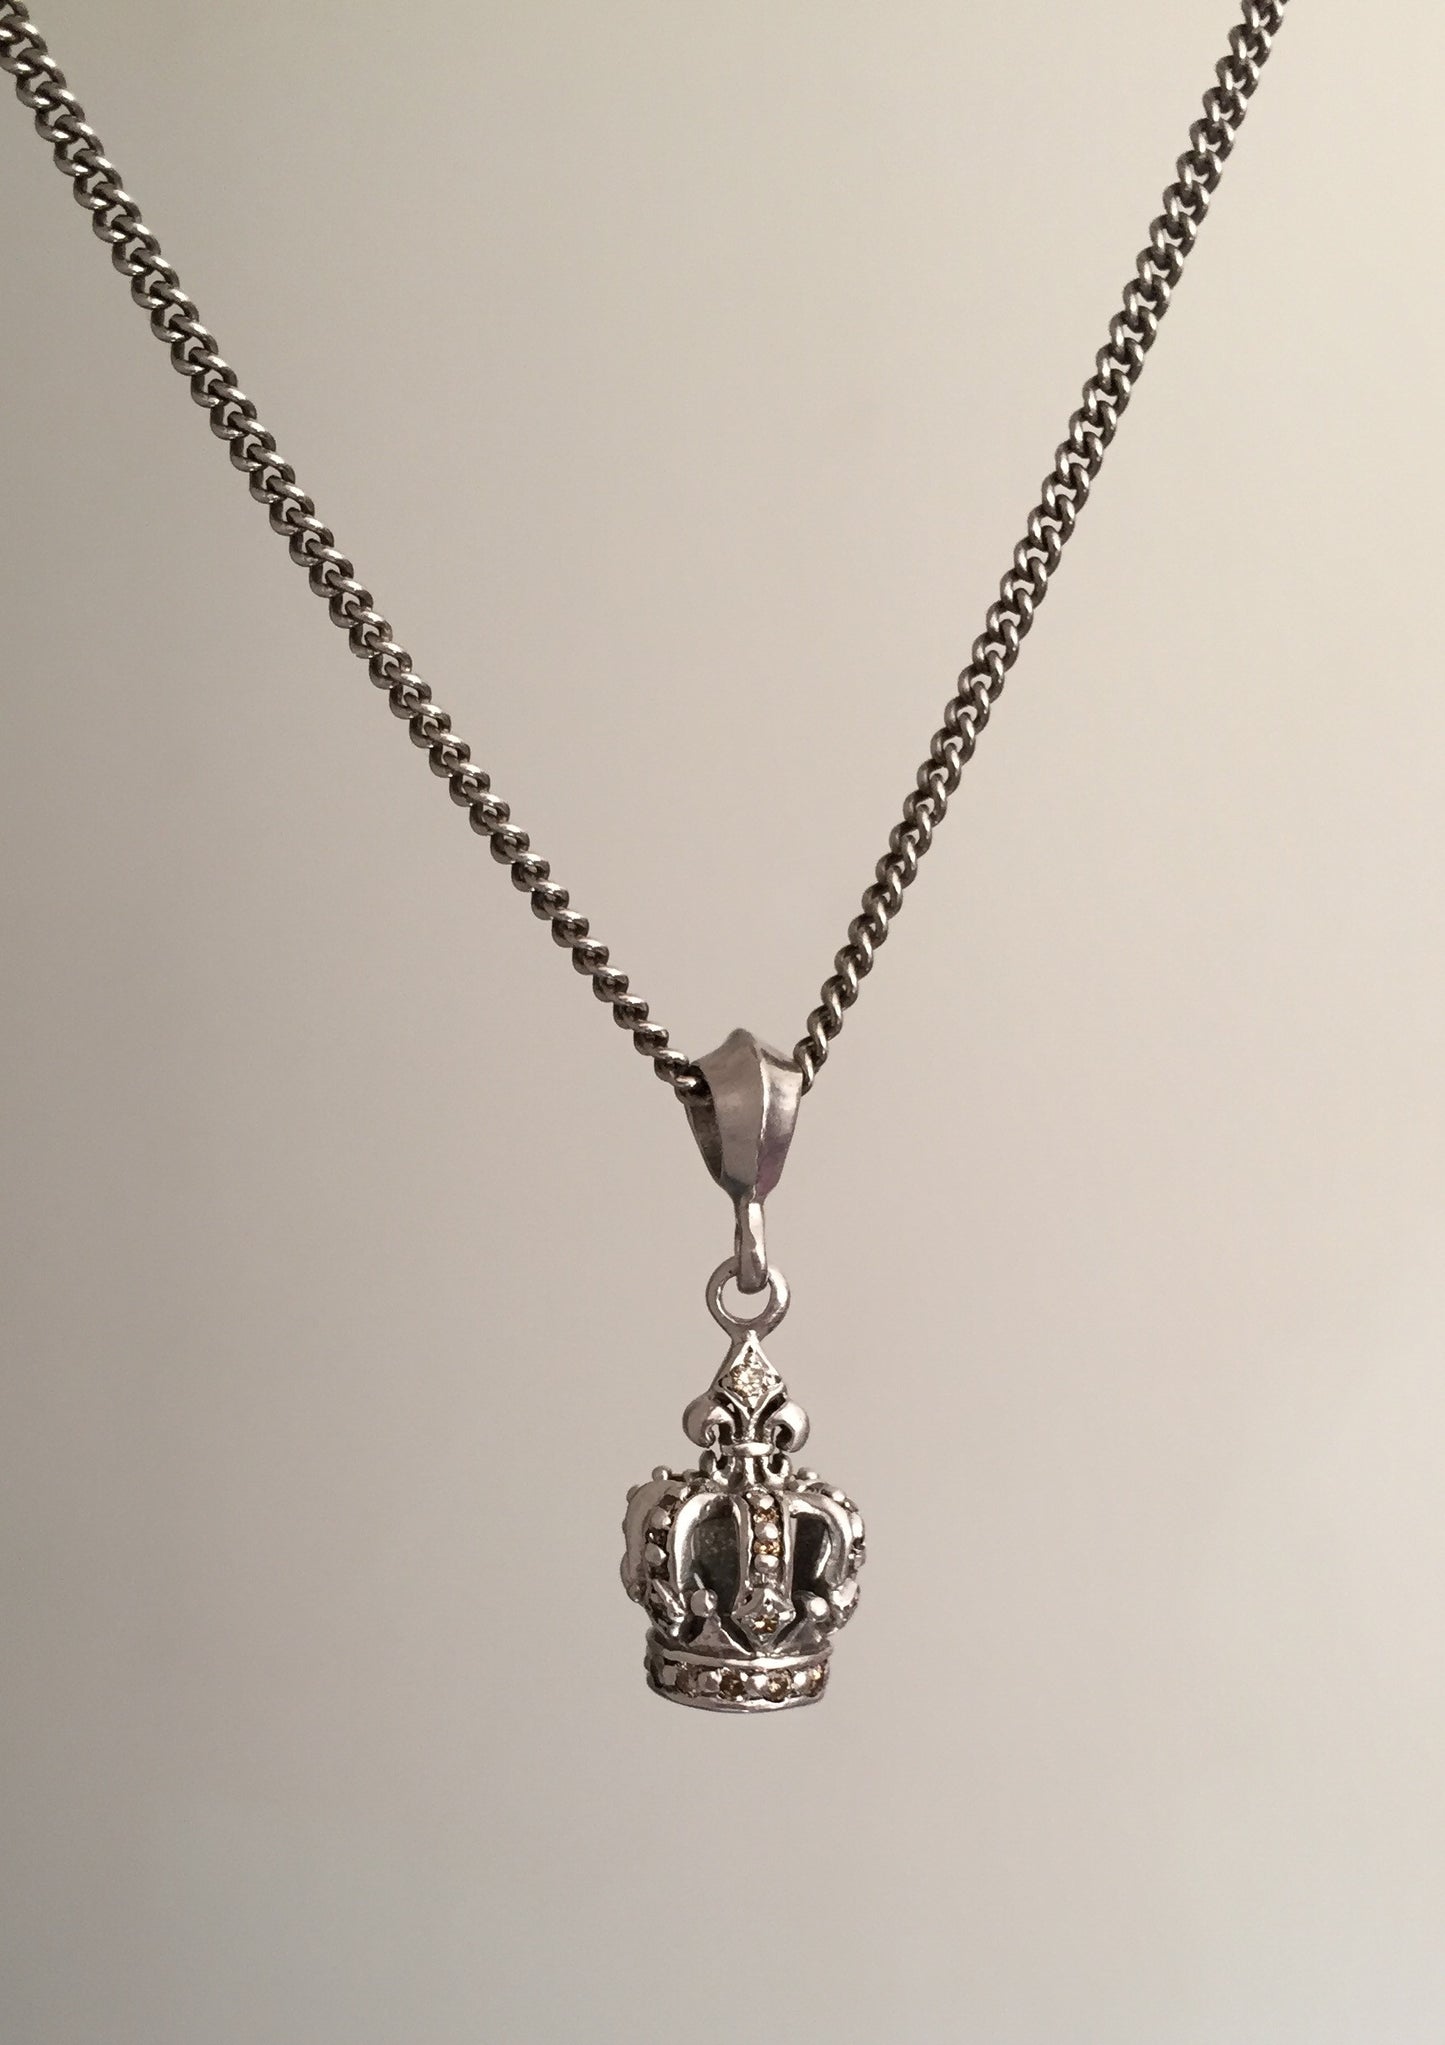 Necklace - Silver Crown & Diamonds by Roman Paul